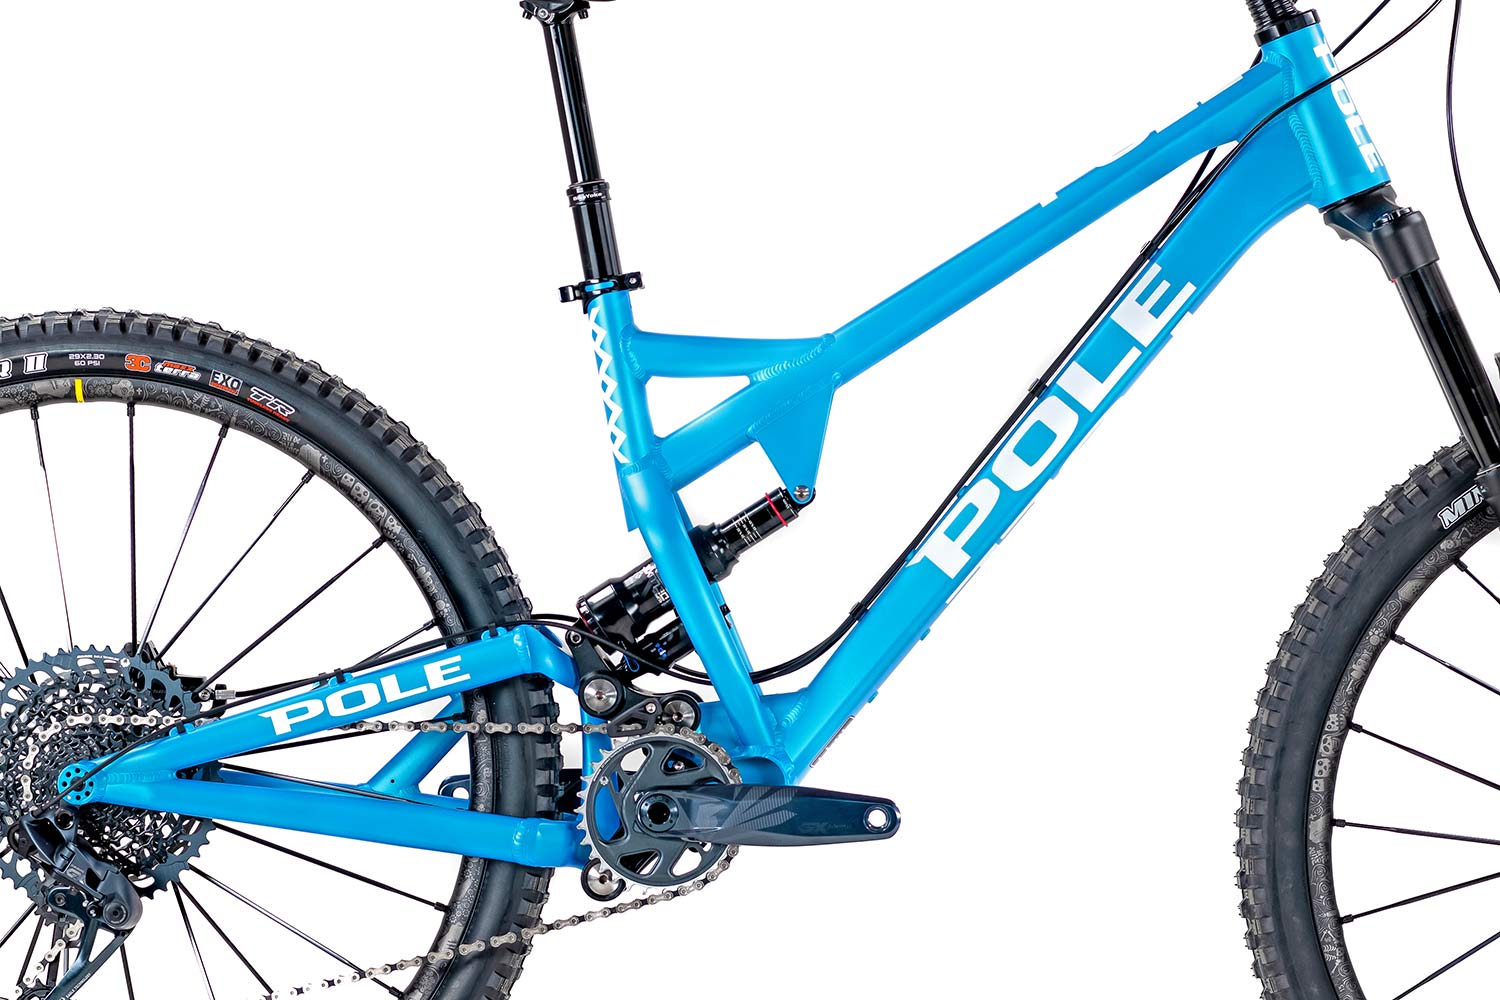 Pole Evolink 140 v1.4 all-mountain bike, updated progressive 29er trail enduro MTB, frame detail